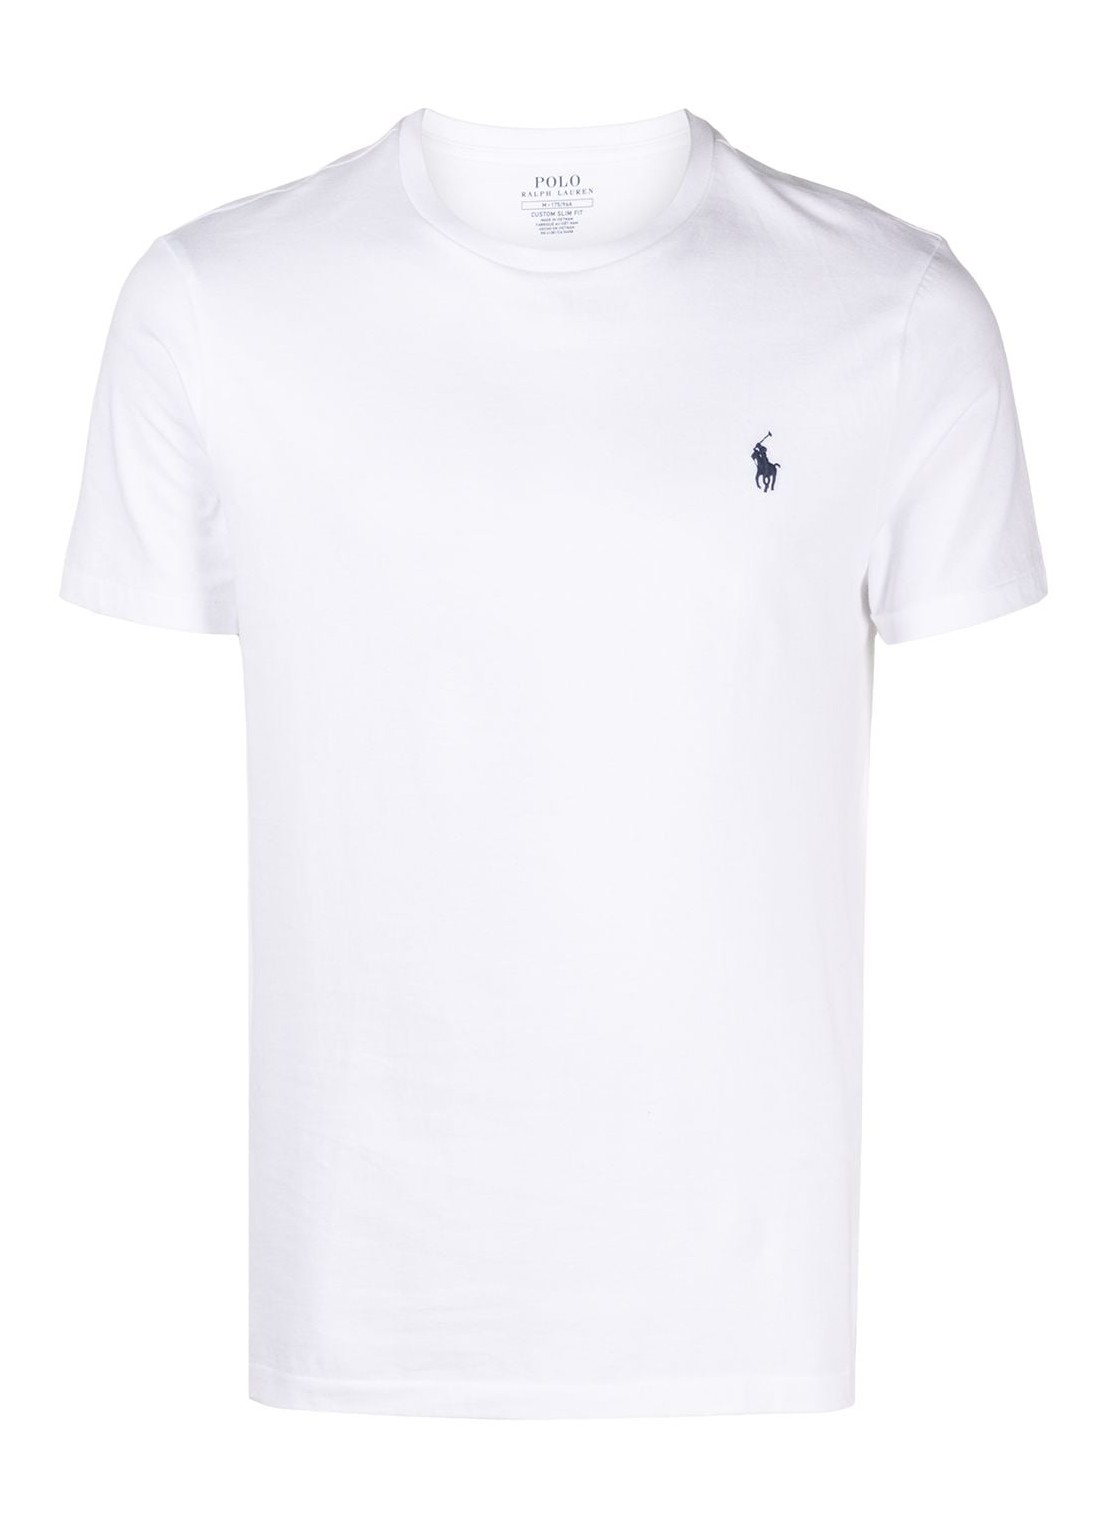 Camiseta polo ralph lauren t-shirt man jersey ssl tshirt 710680785003 white talla XXL
 